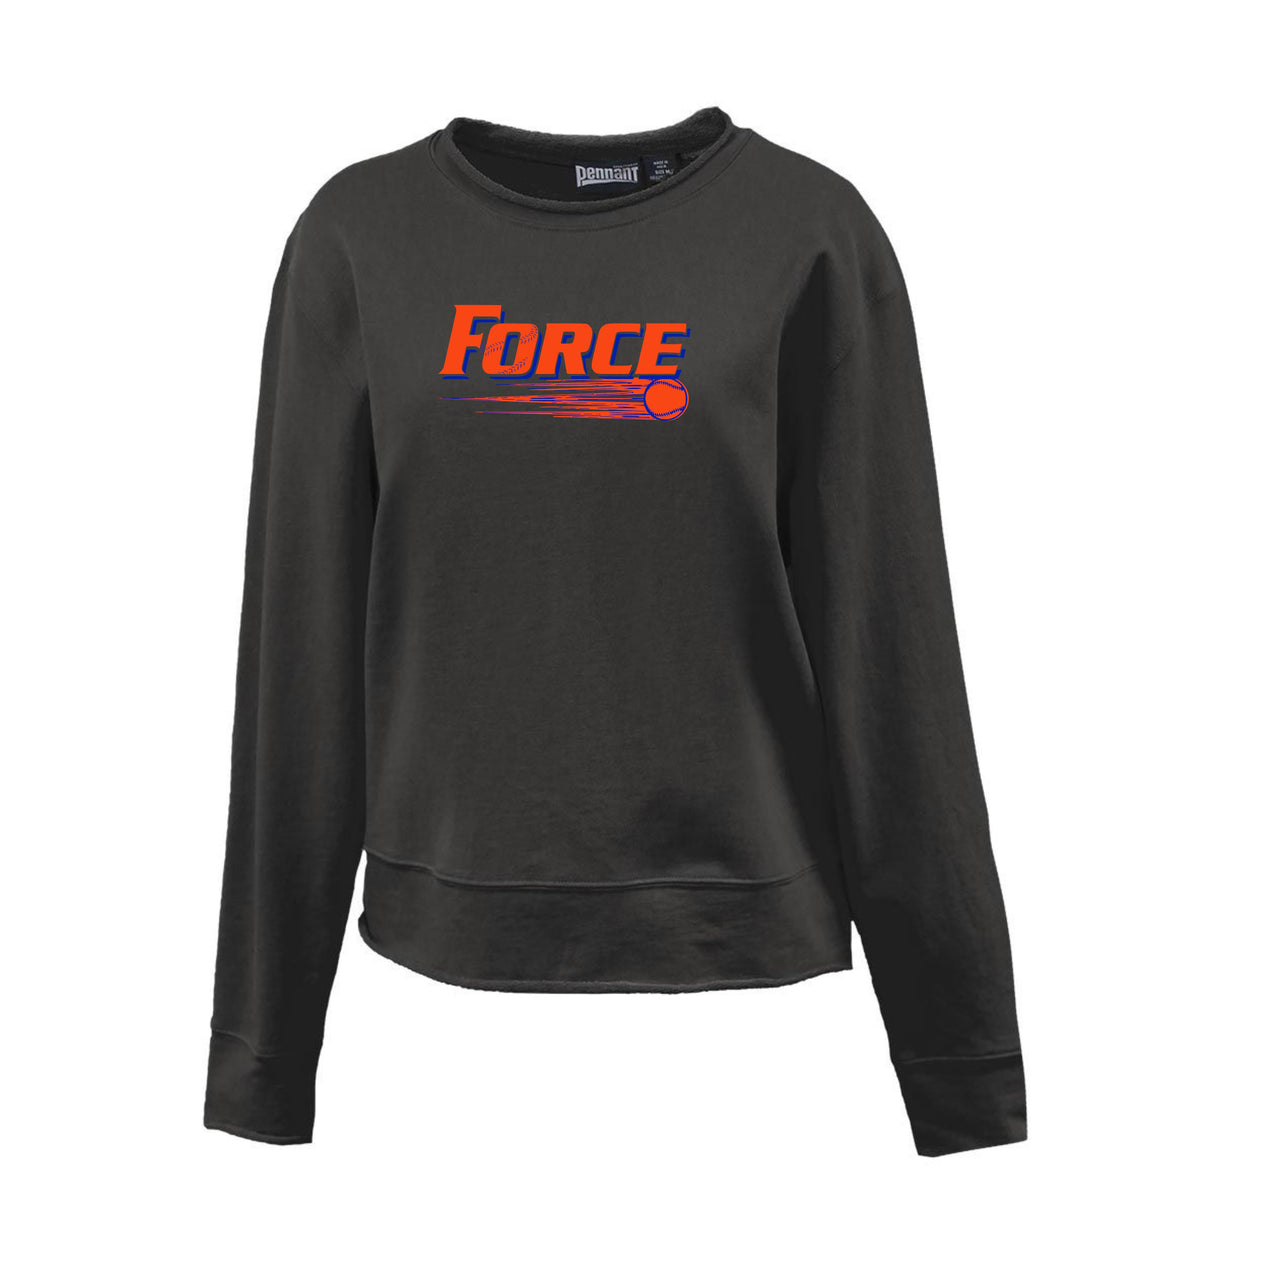 Ladies - Rolled Edge Crew Long Sleeve Tee - (Force Softball)